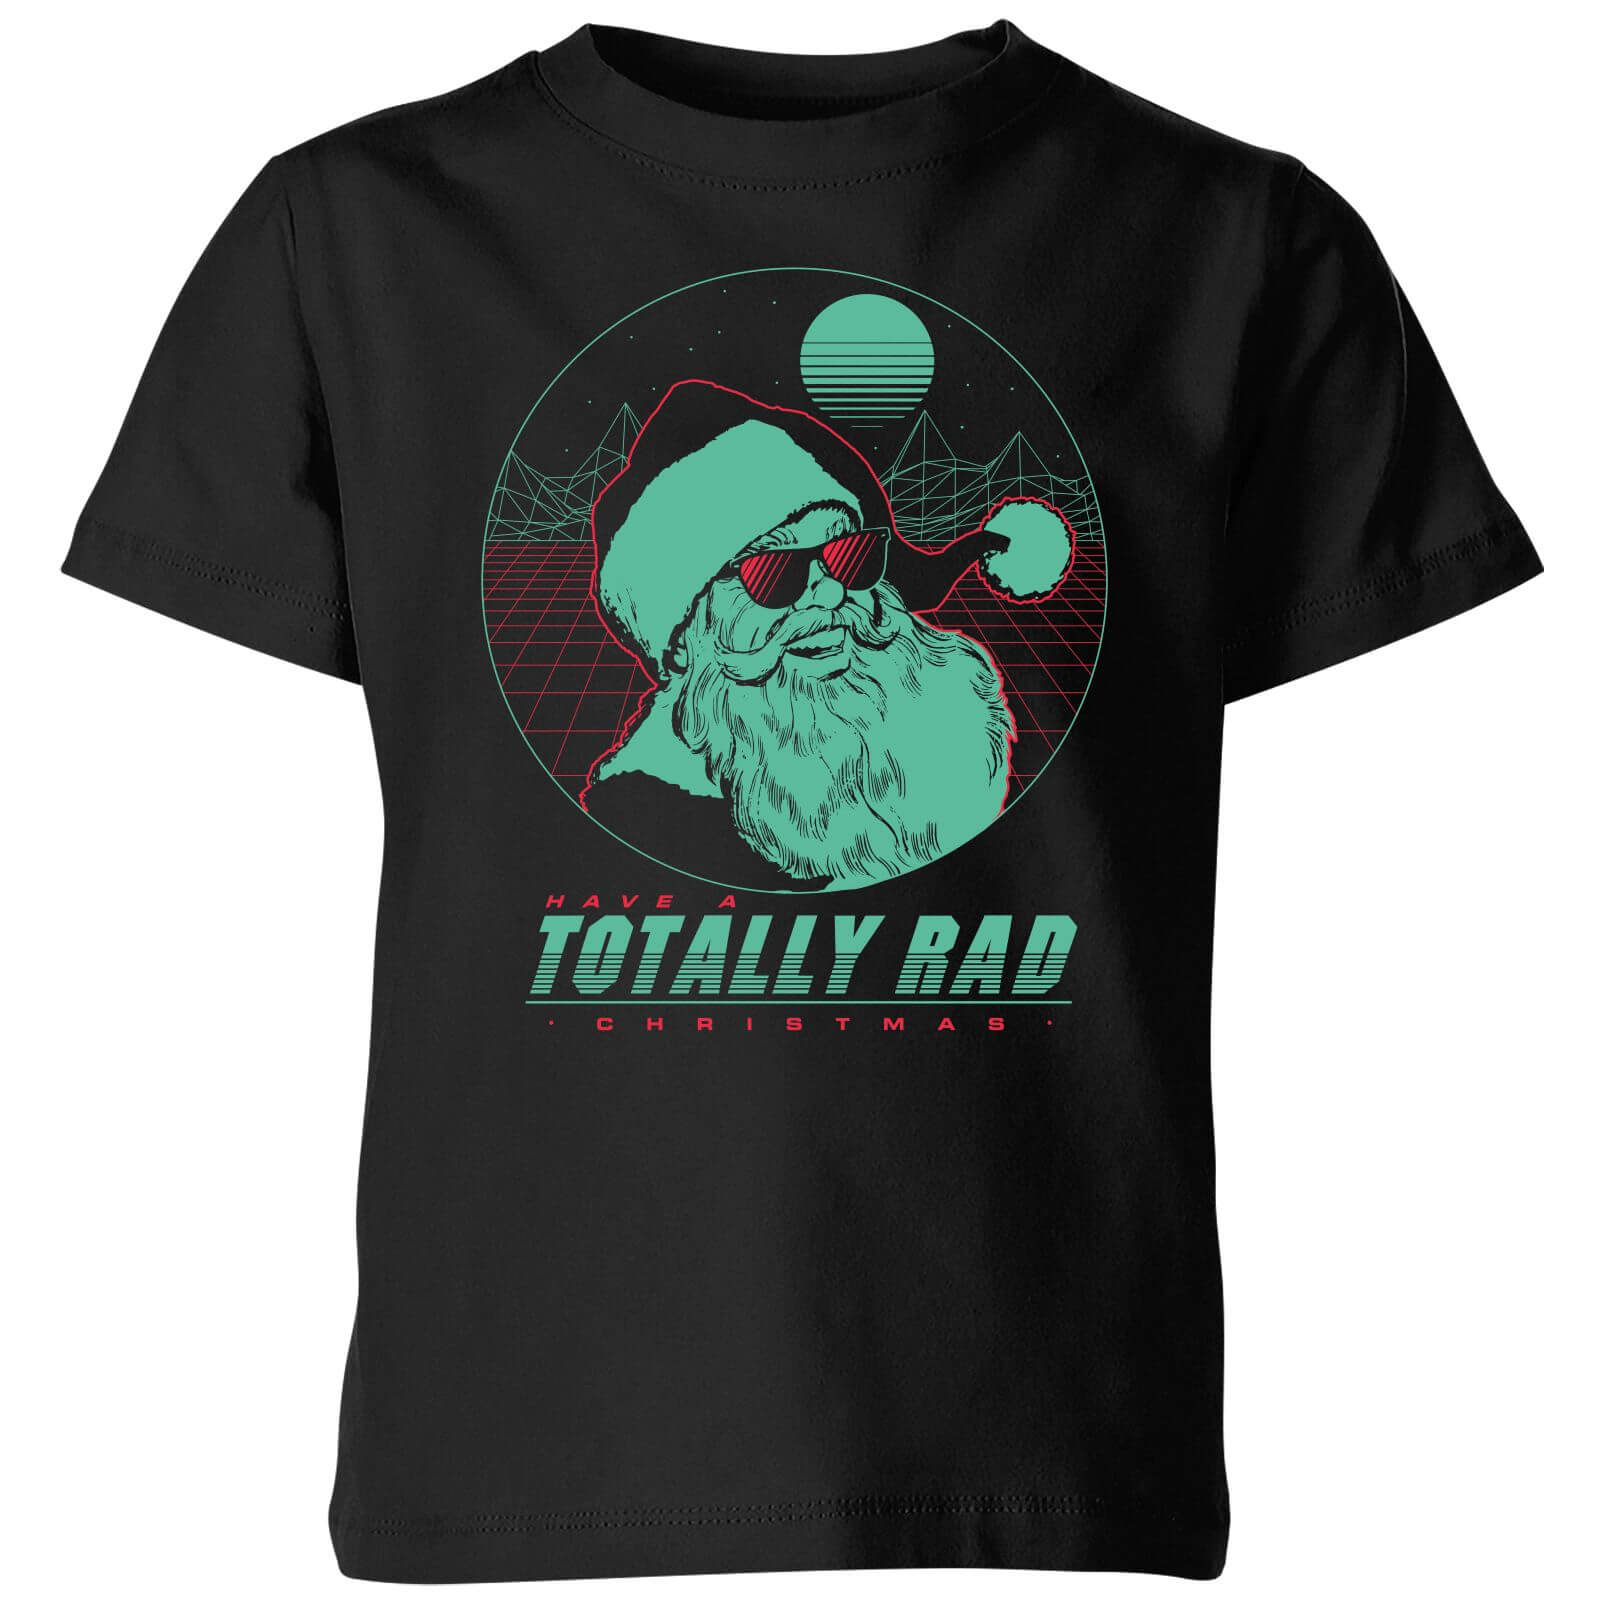 Totally Rad Christmas Kids' T-Shirt - Black - 3-4 Years